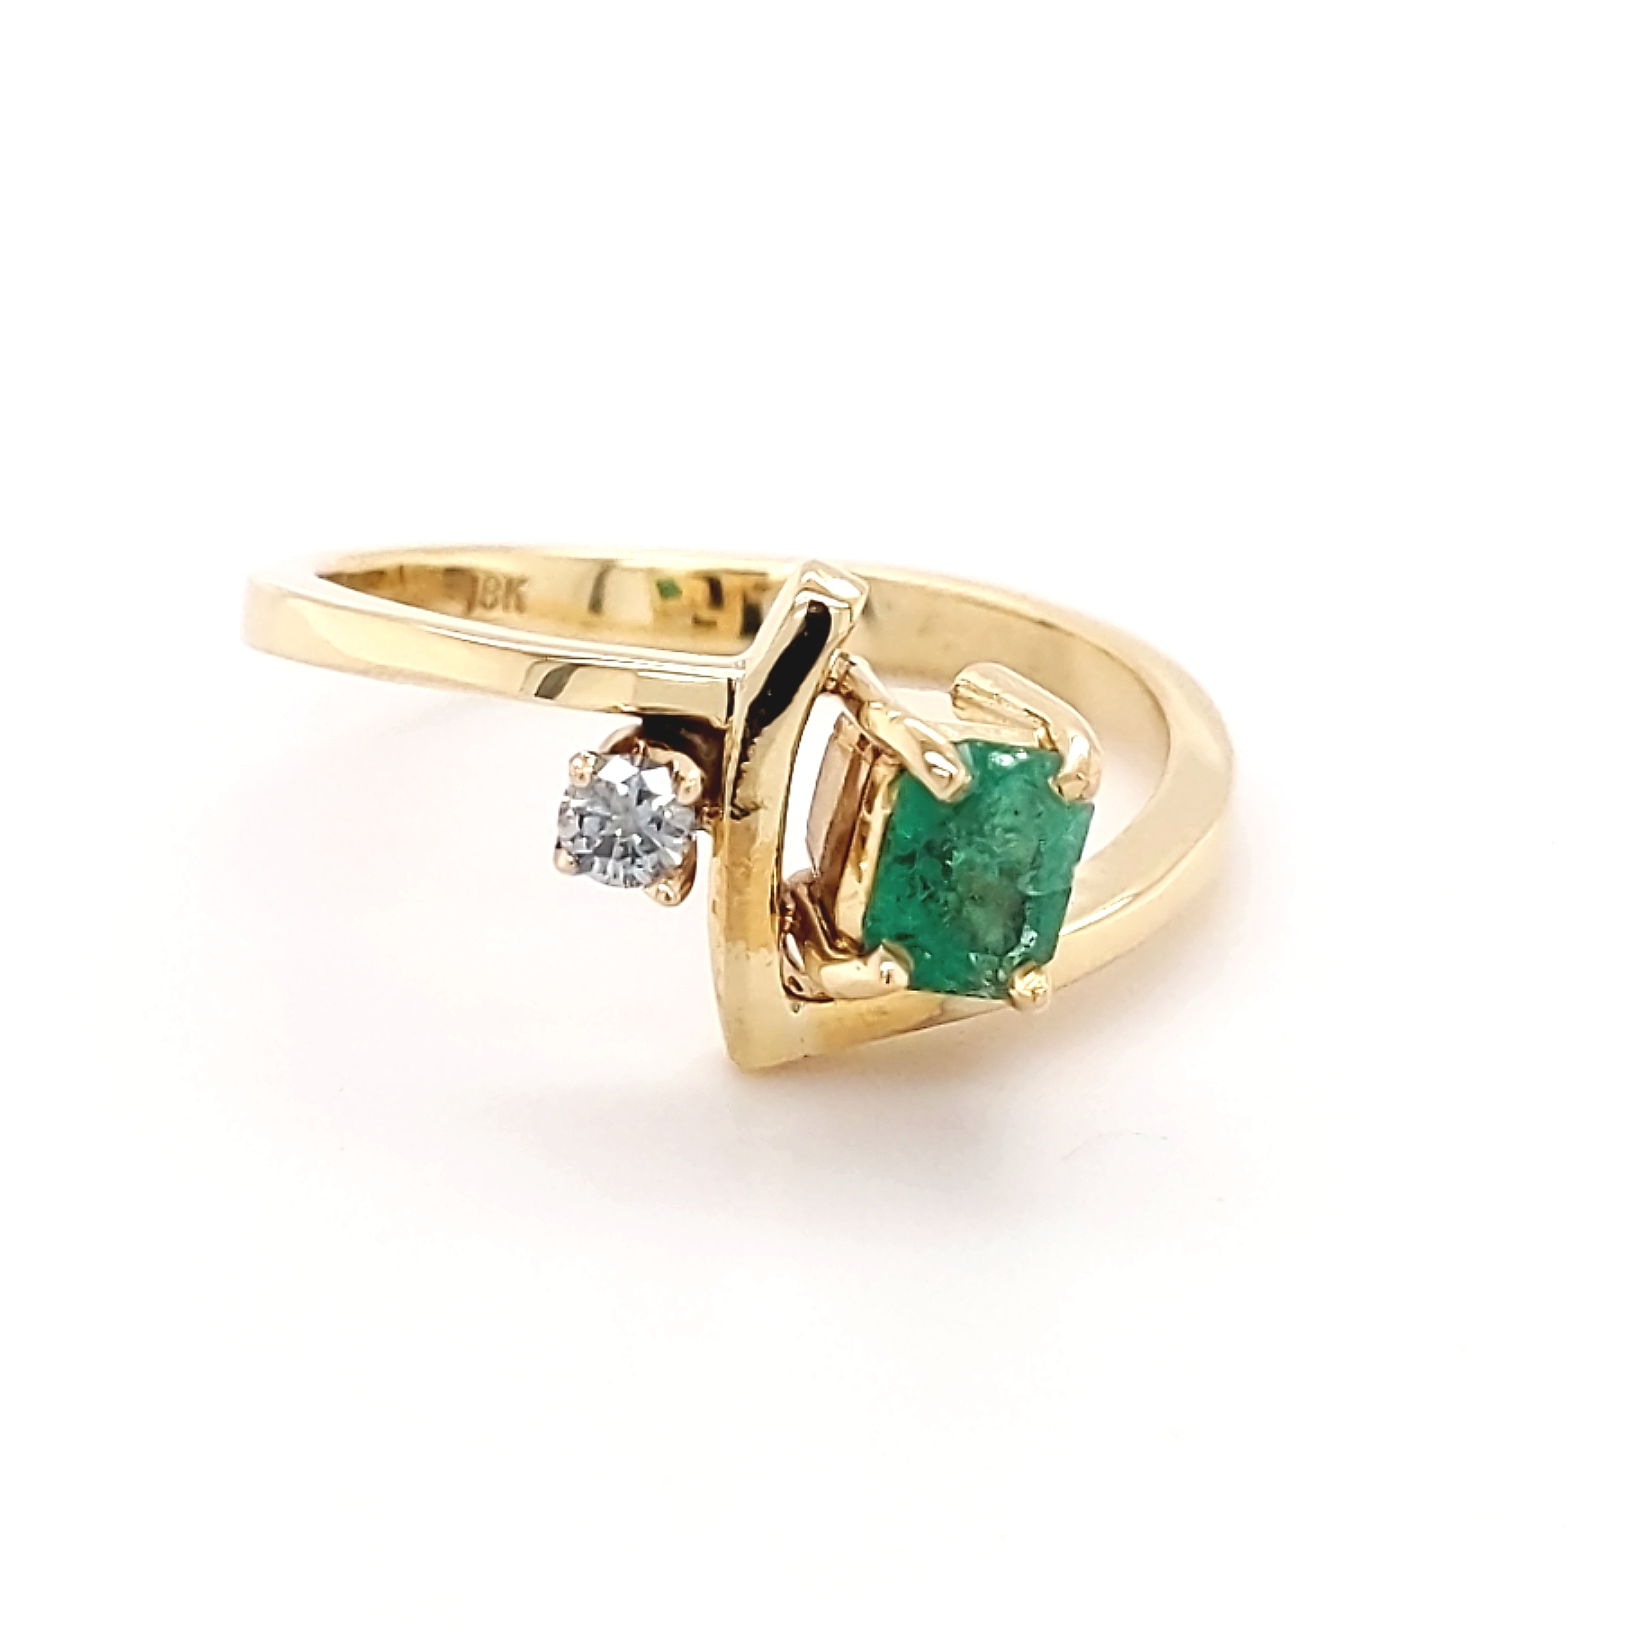 18K Yellow Gold Emerald & Diamond Ring finger size 8.25